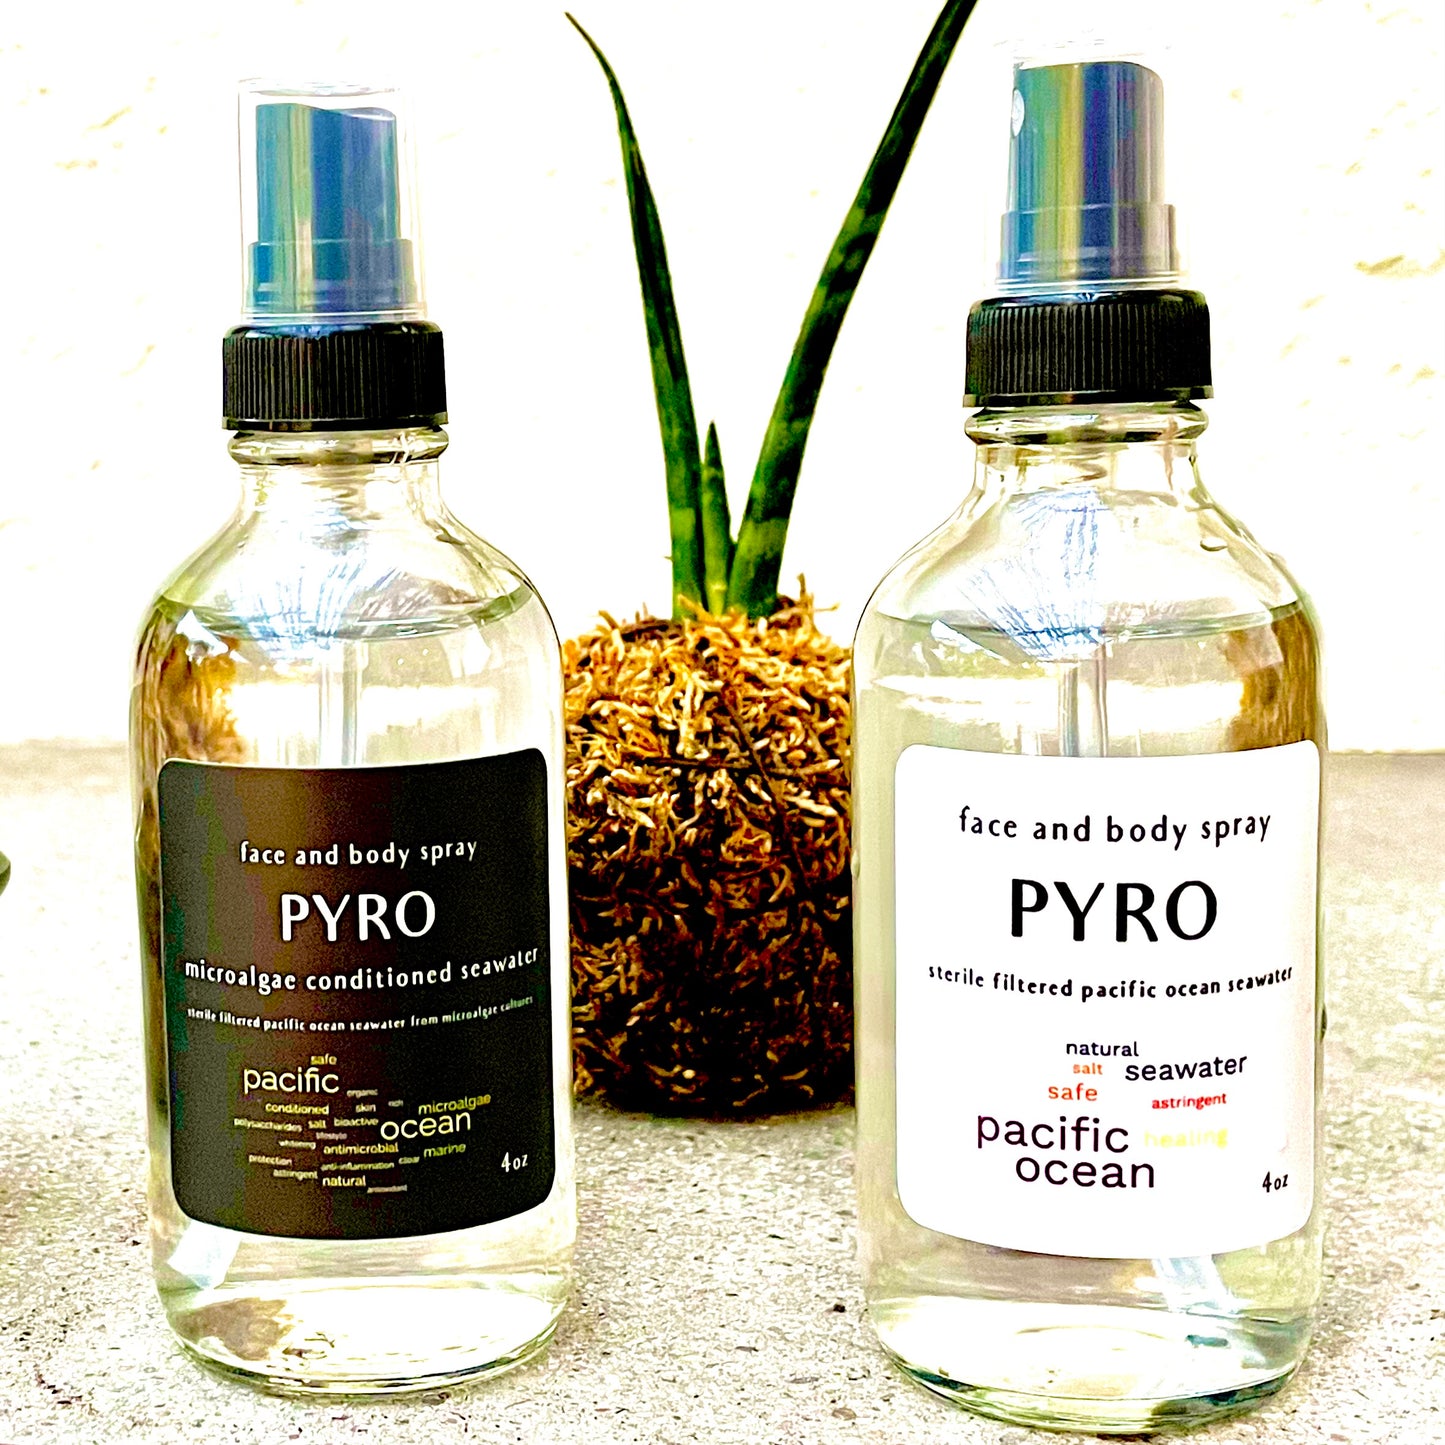 PYRO - Pure Pacific Ocean Seawater